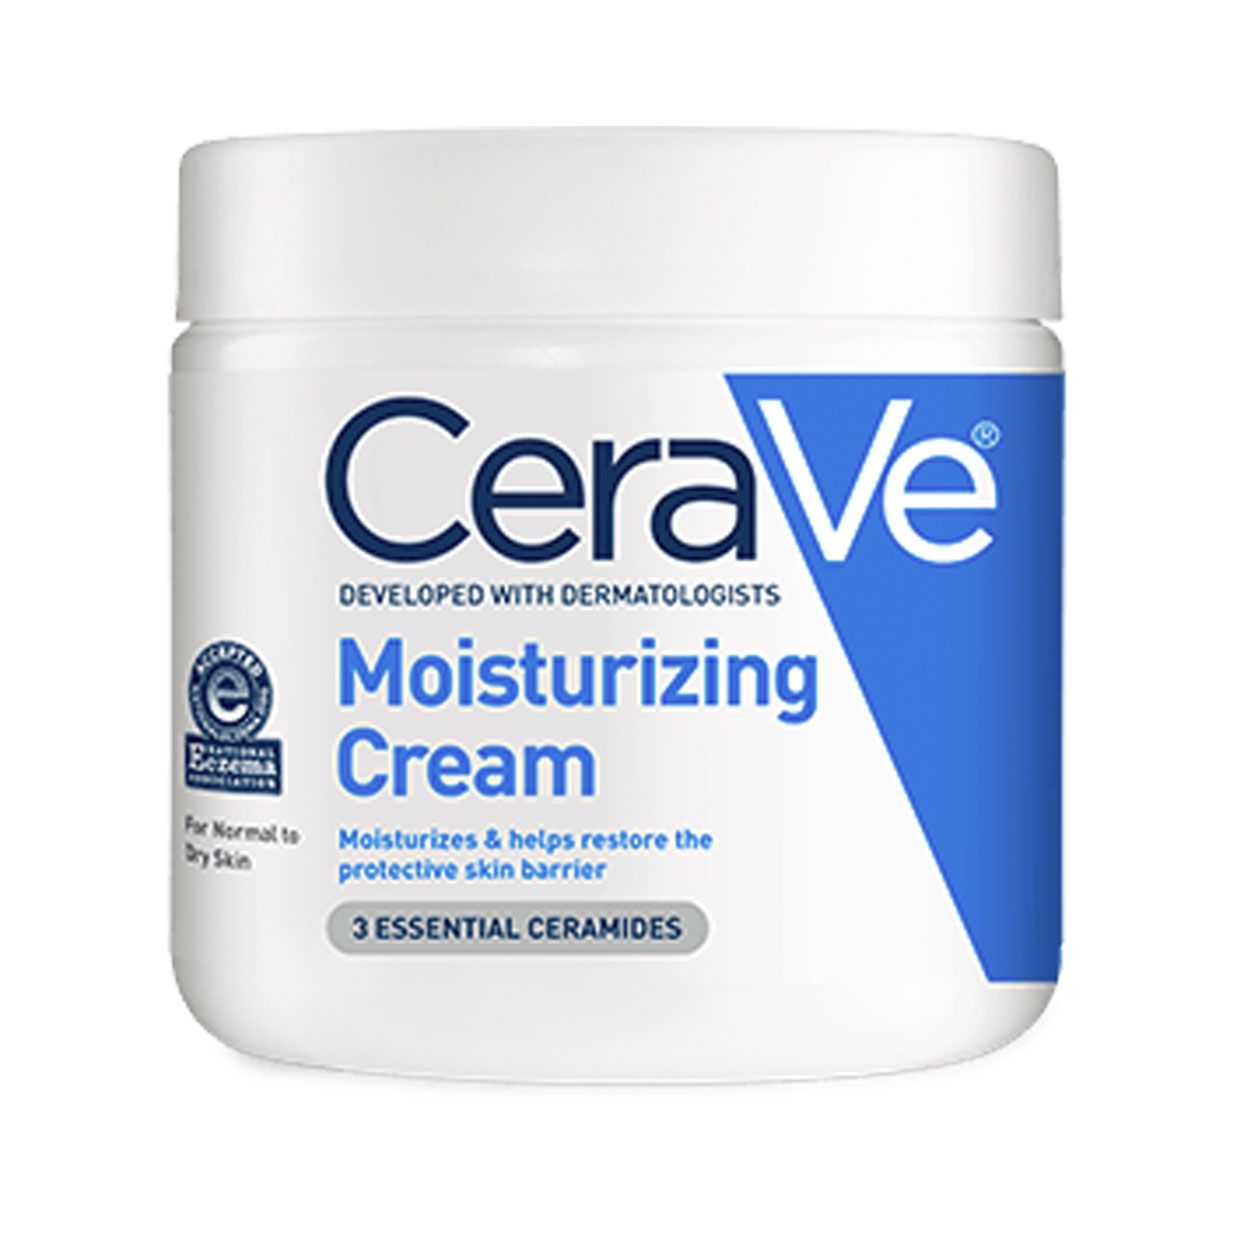 Cerave_Moisturizing_Cream